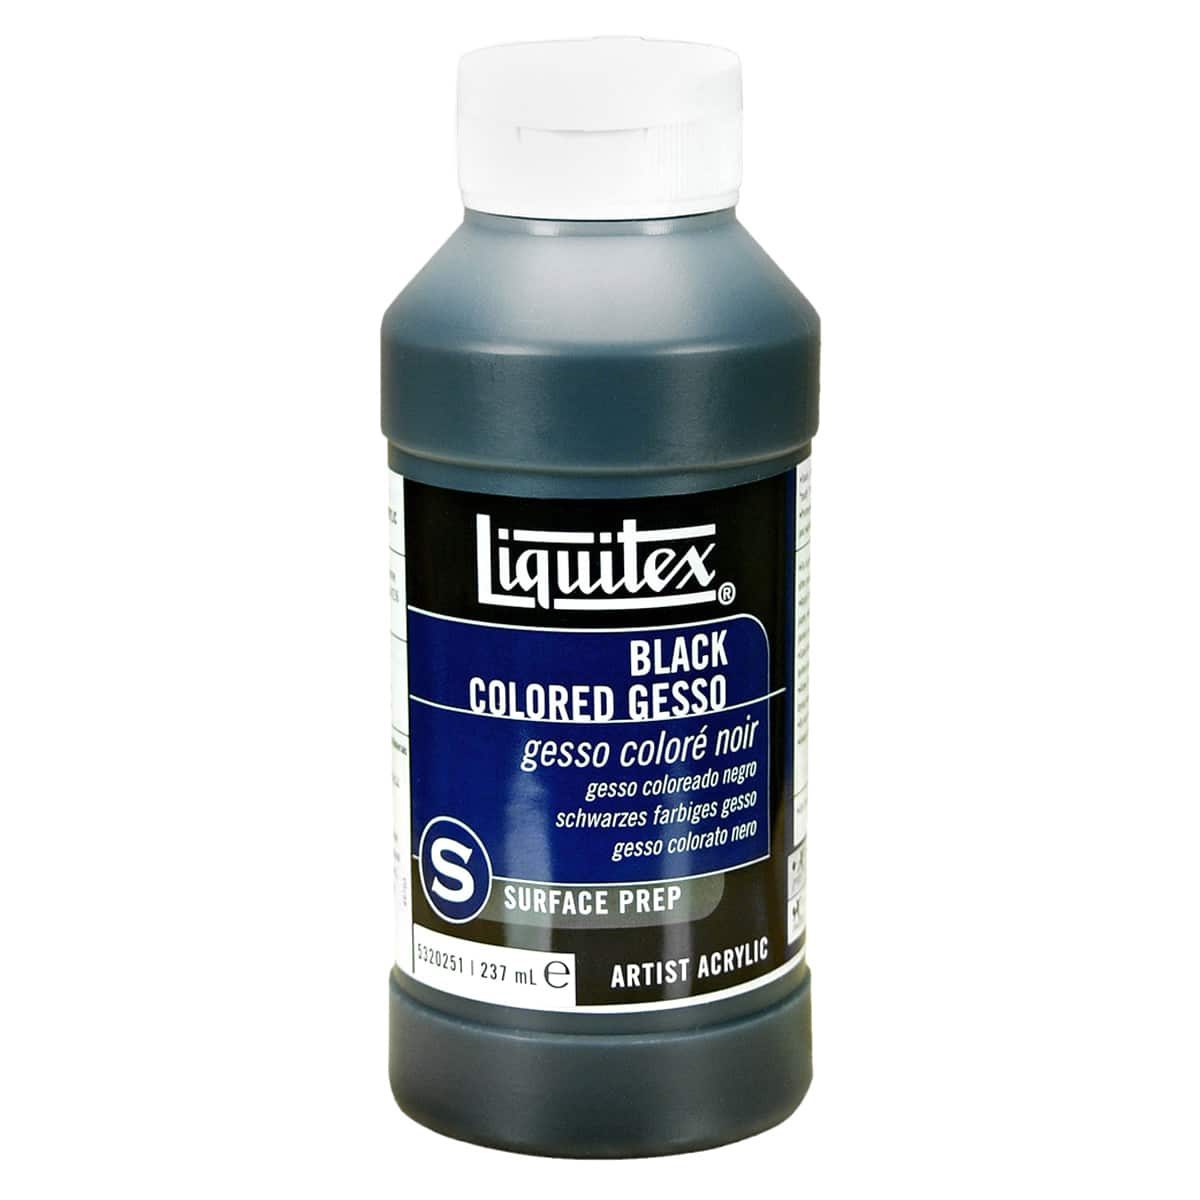 Liquitex Acrylic Gesso Surface Prep Mediums Black 8 oz